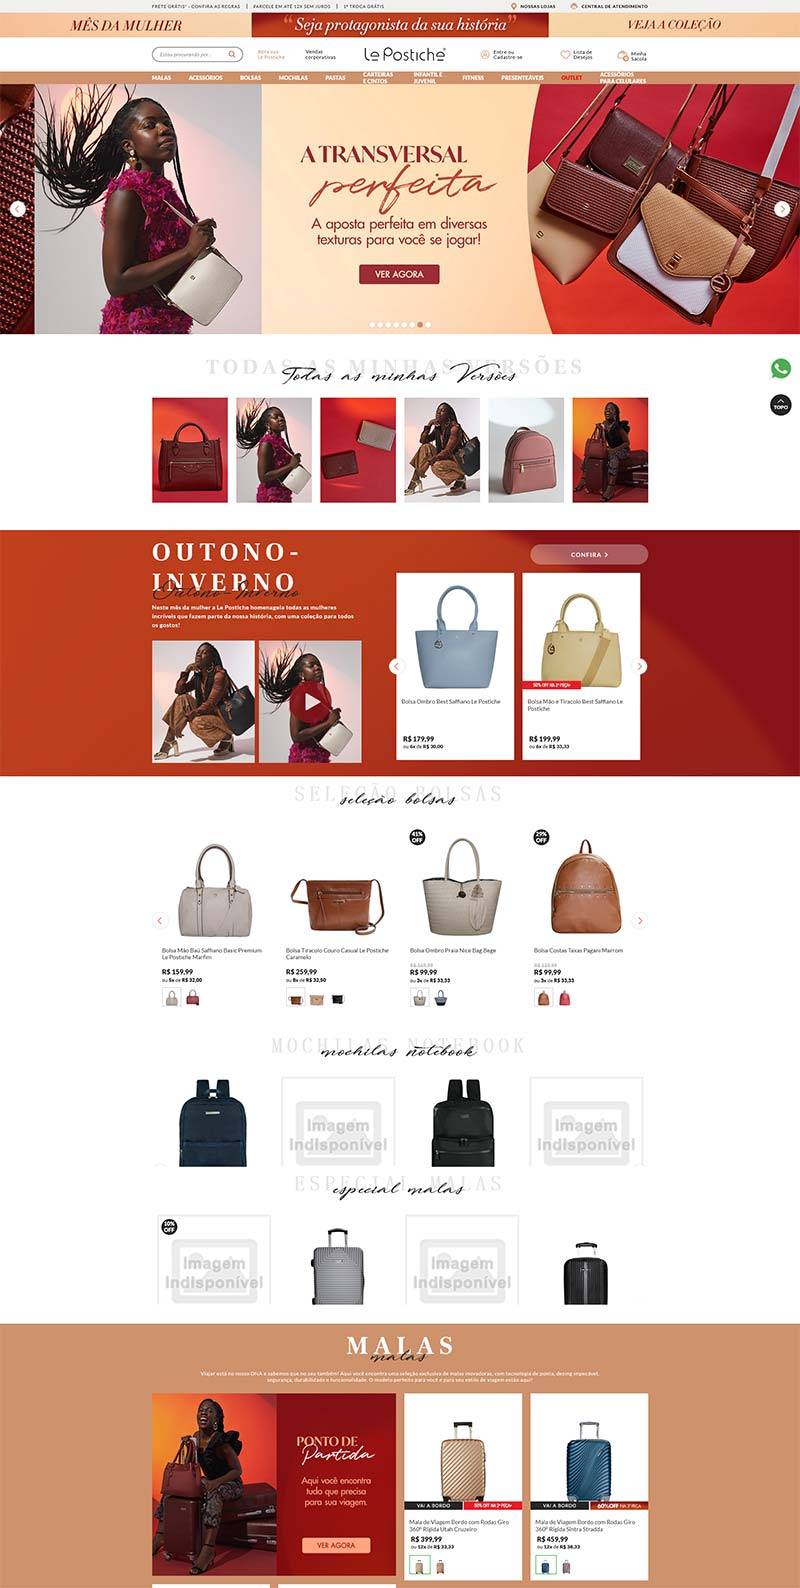 Le Postiche 巴西时尚箱包品牌购物网站